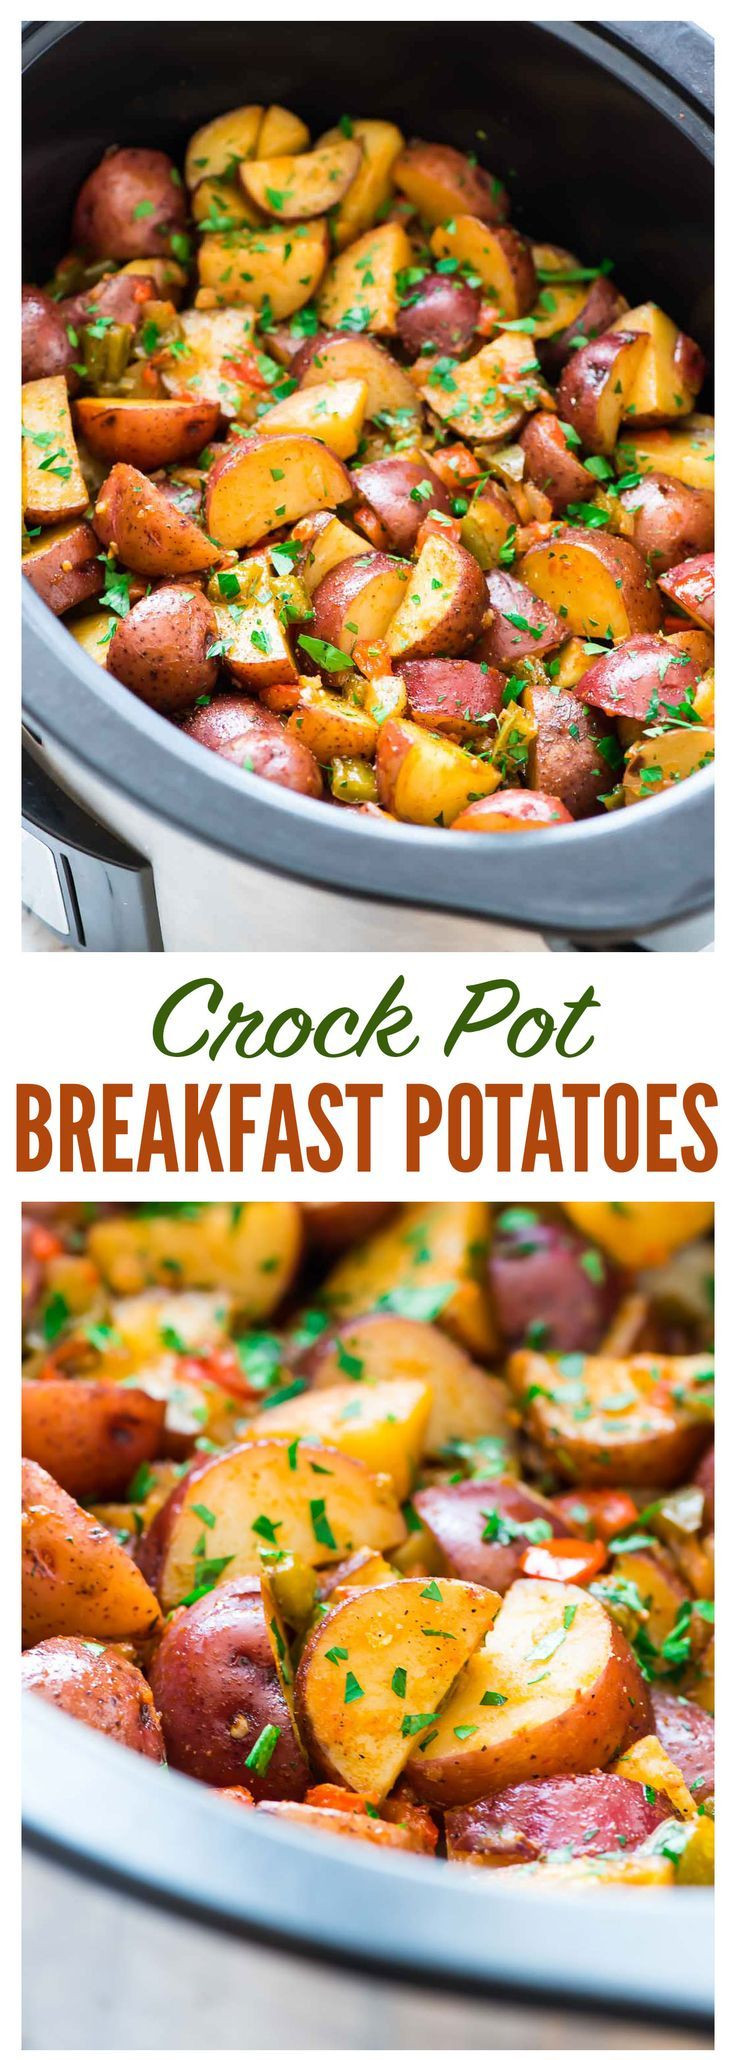 Crockpot Breakfast Potatoes
 Crockpot Breakfast Potatoes – Crisp tender potatoes made